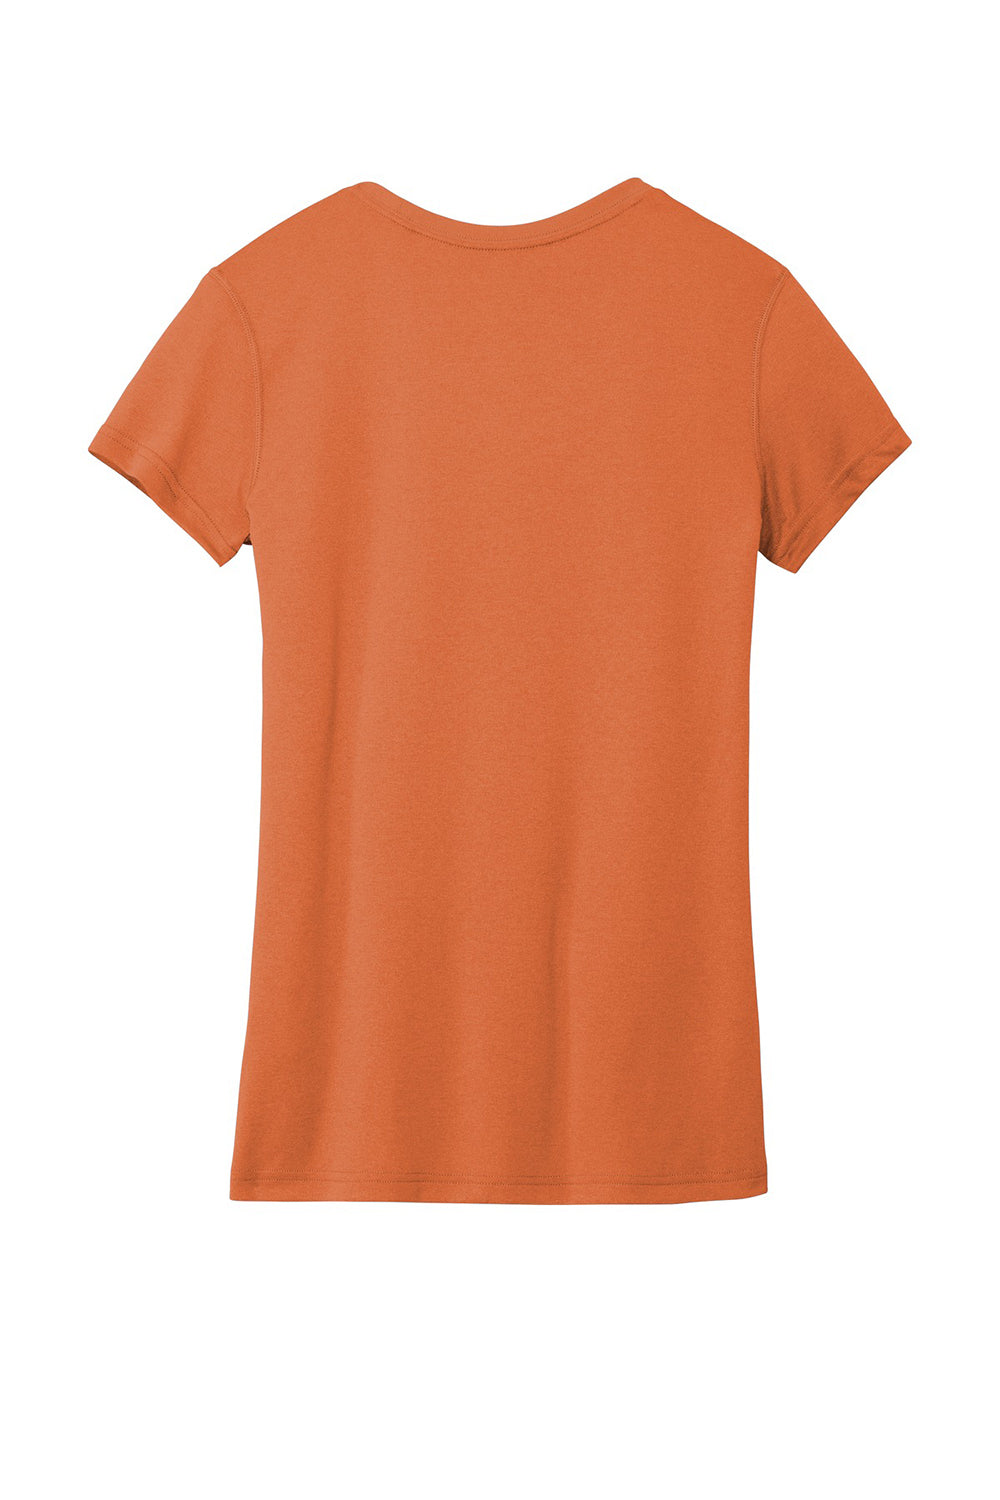 Nike CU7599 Womens Legend Dri-Fit Moisture Wicking Short Sleeve Crewneck T-Shirt Desert Orange Flat Back